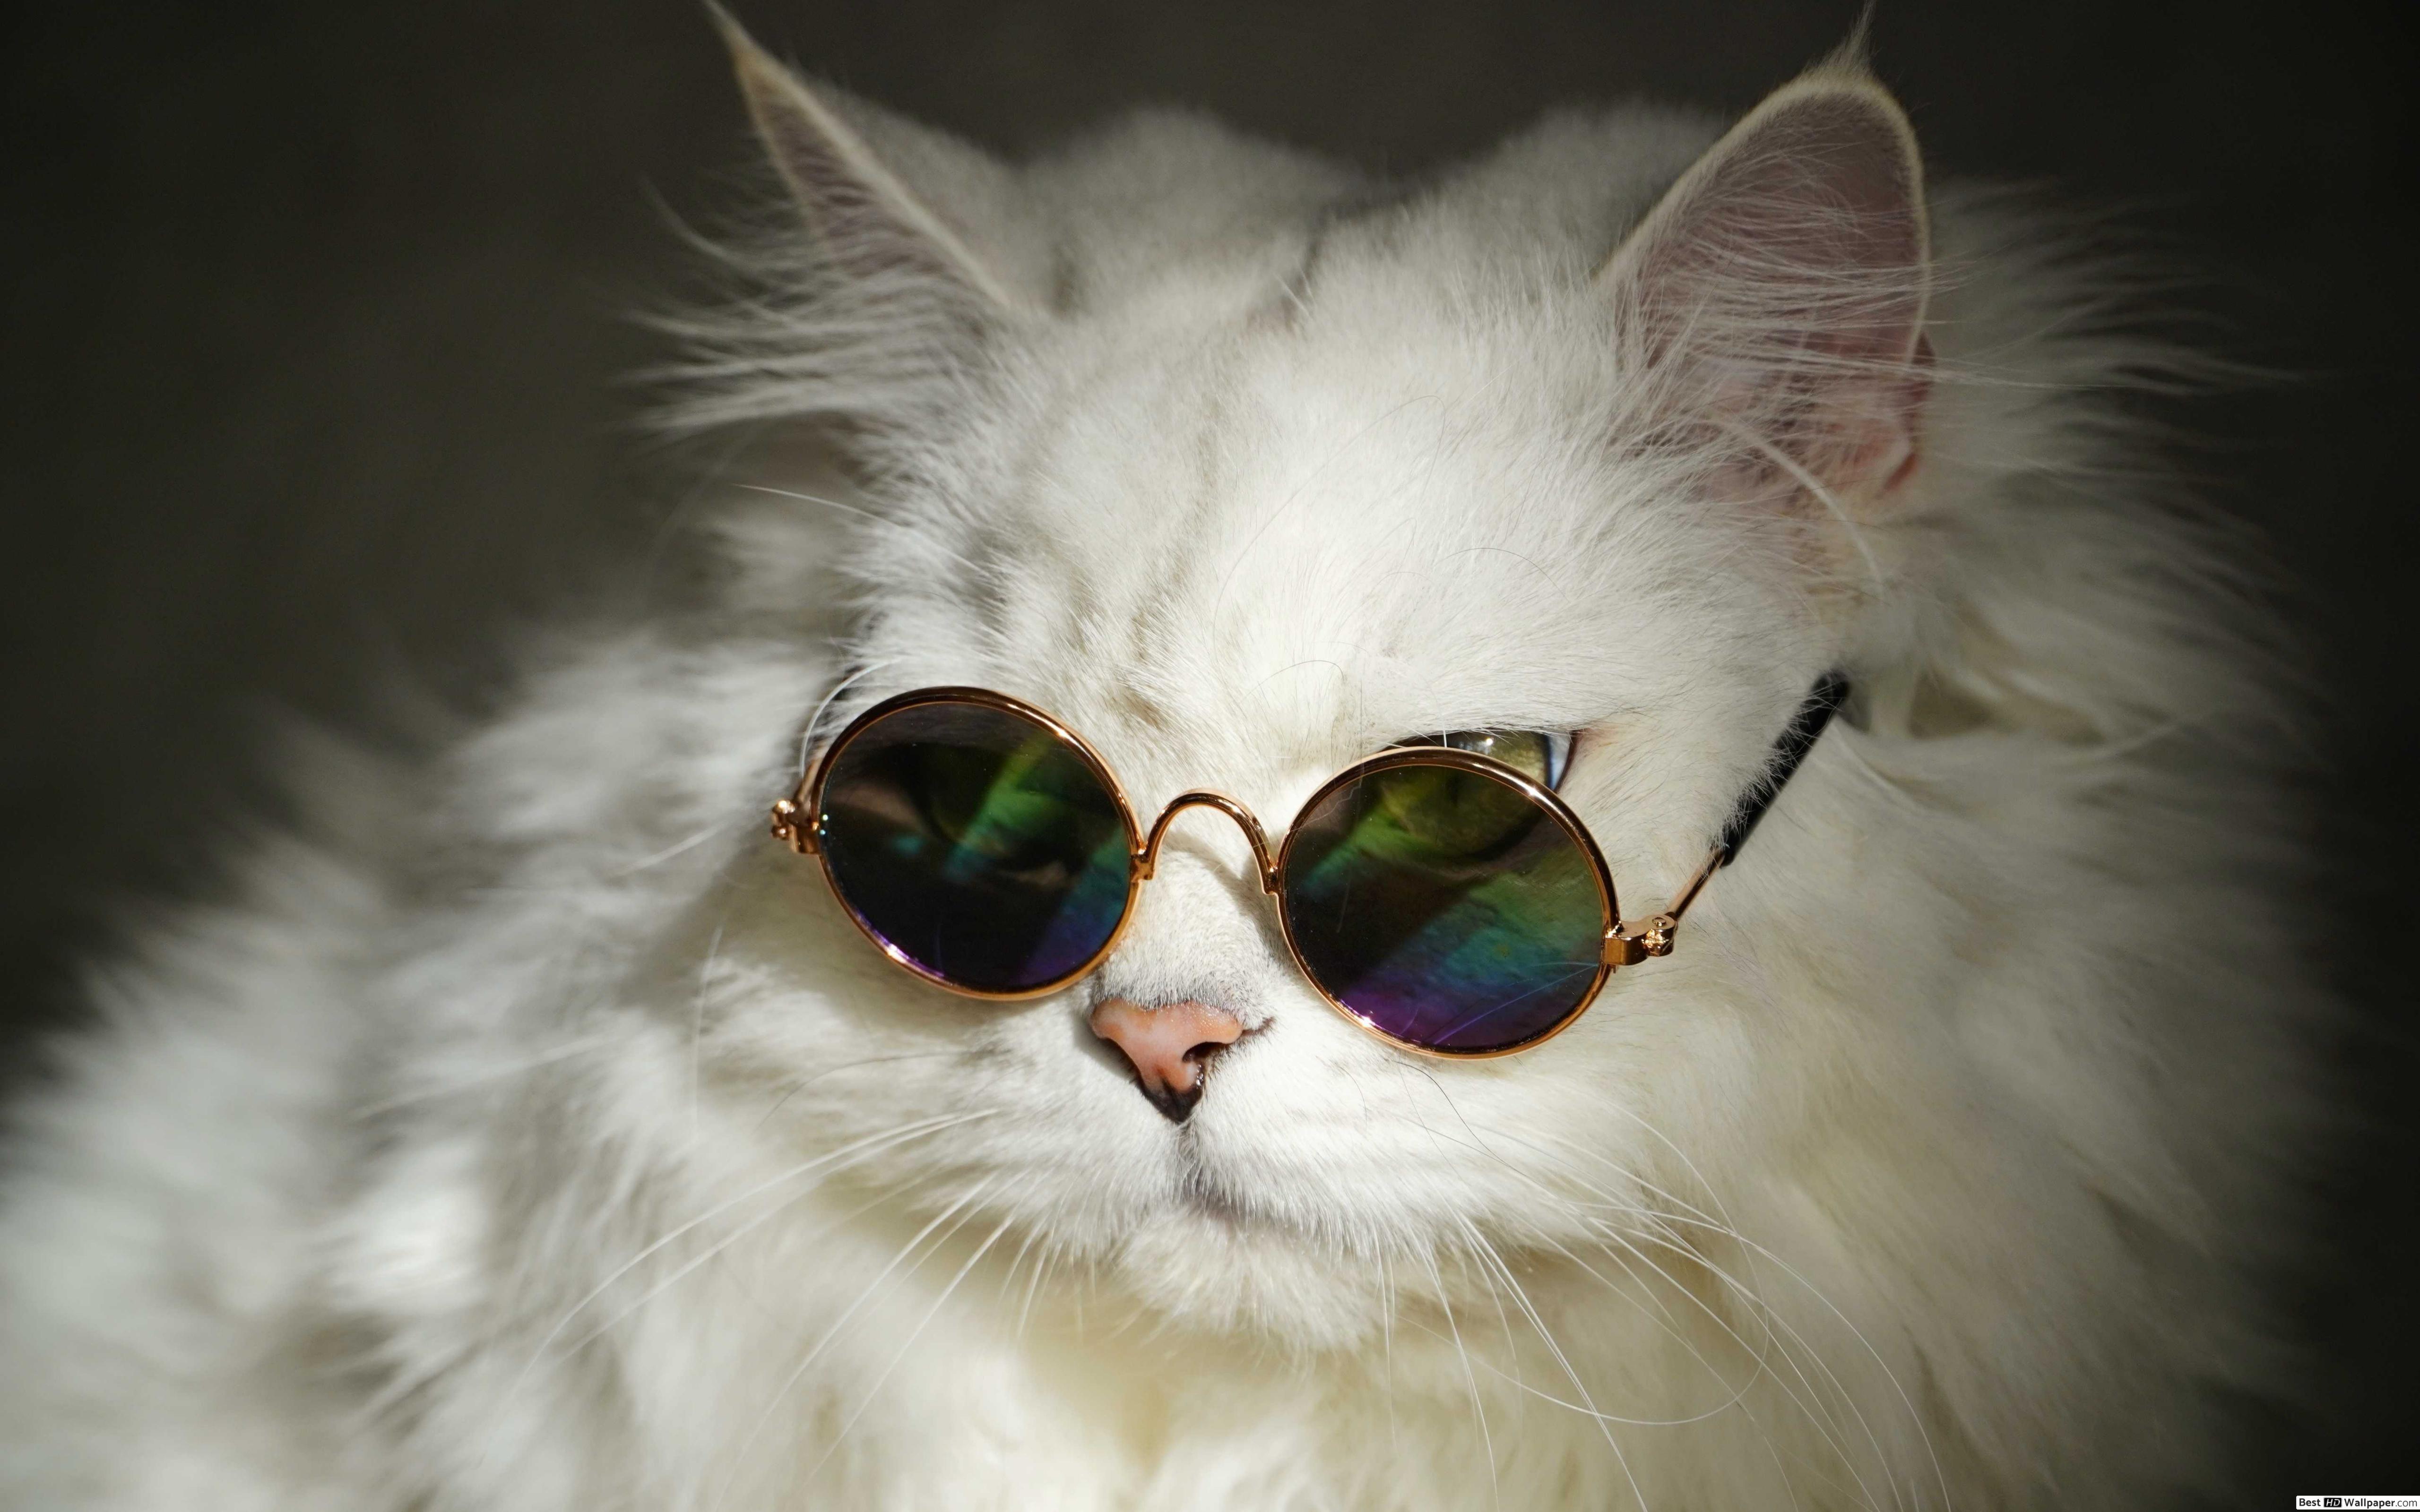 Cat Wearing Glasses Wallpapers - Top Free Cat Wearing Glasses ...